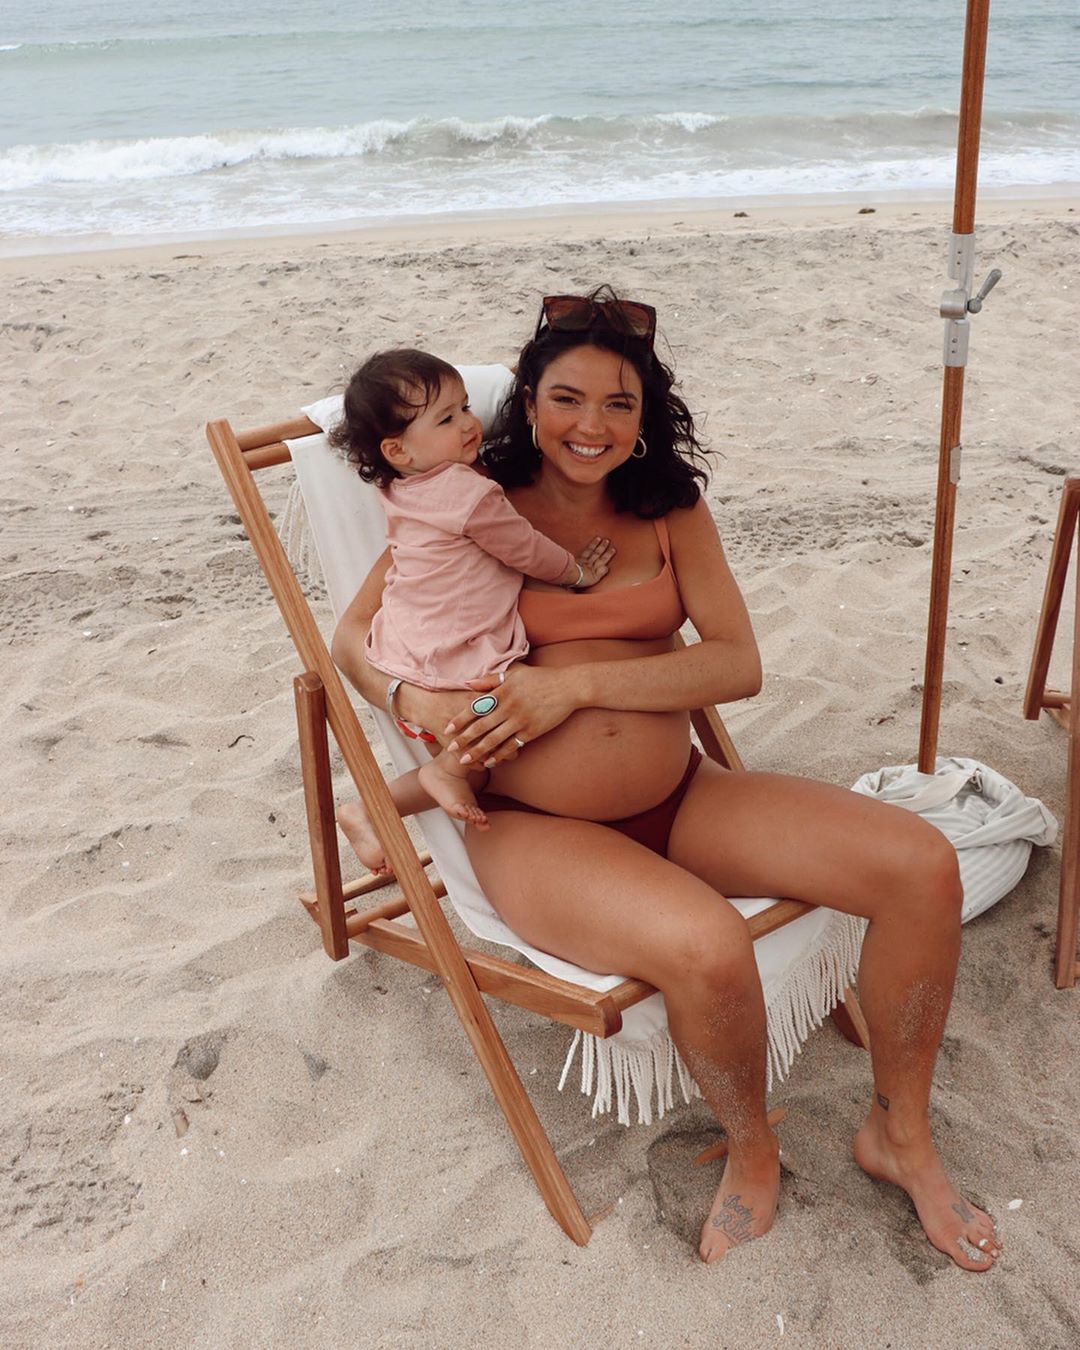 Nudist Beach Feet - Celeb Families' Beach Trips Amid Coronavirus Pandemic: Pics